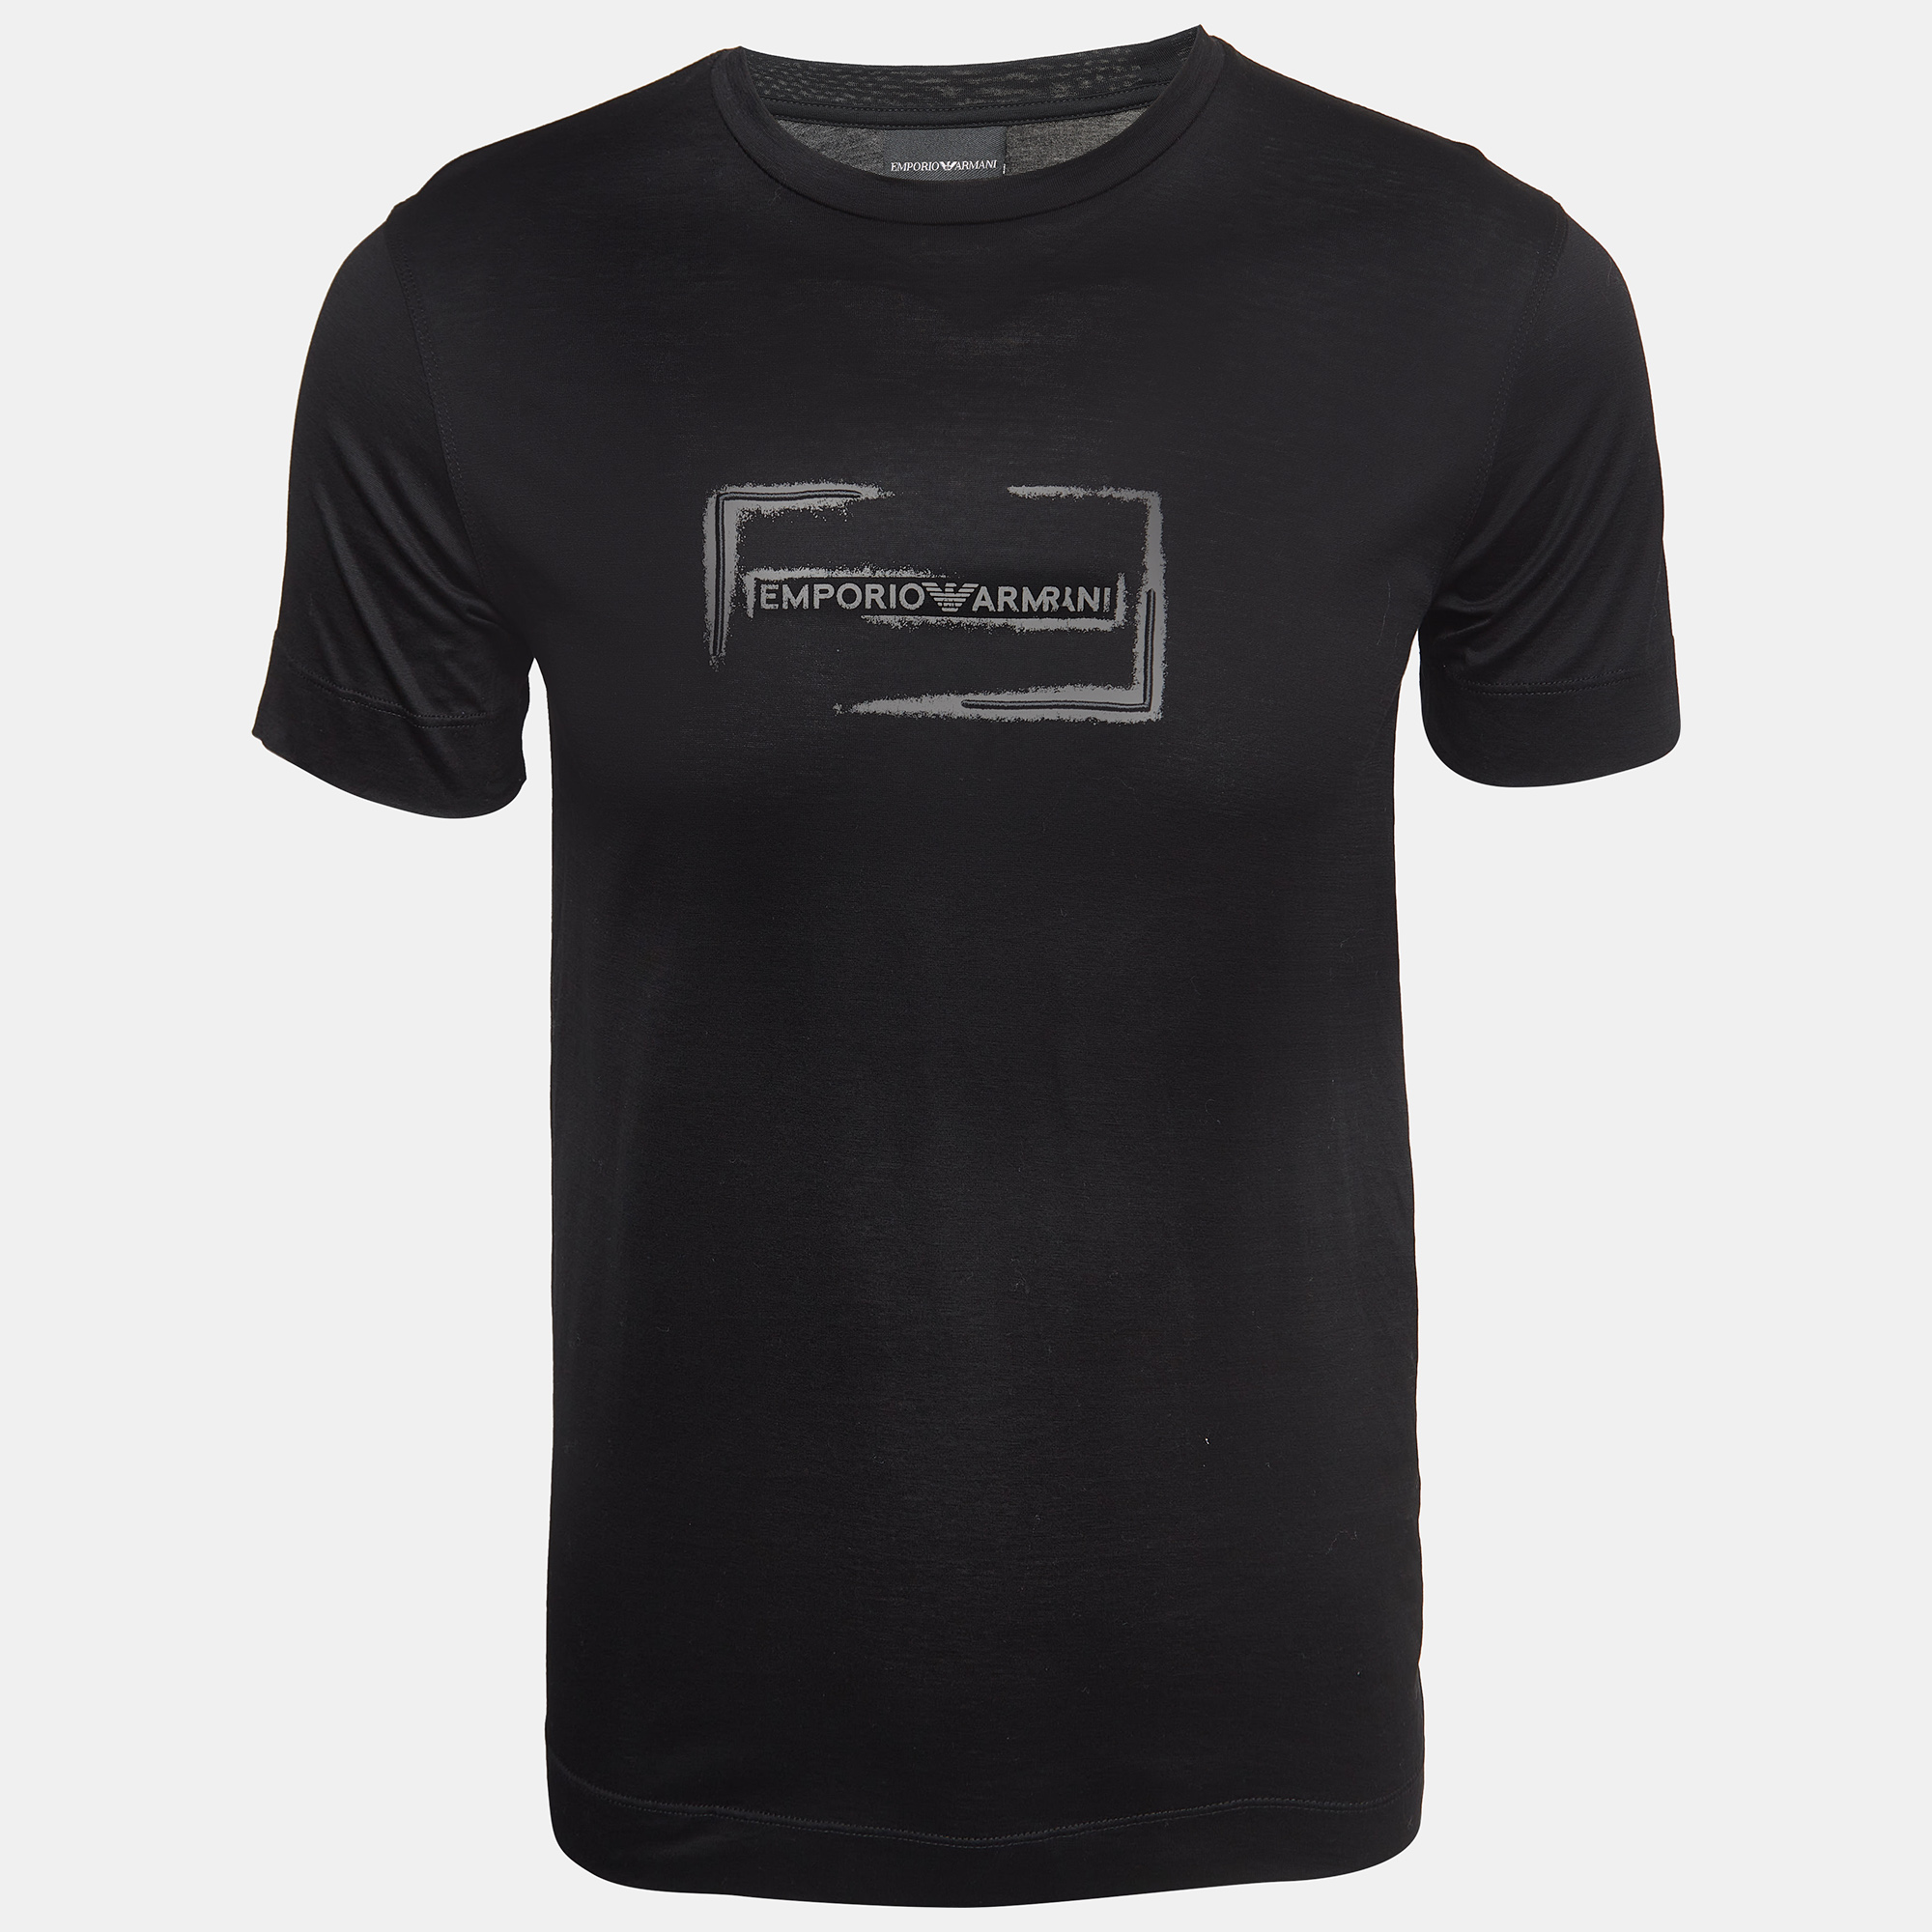 Emporio armani black logo printed cotton knit crew neck t-shirt xs